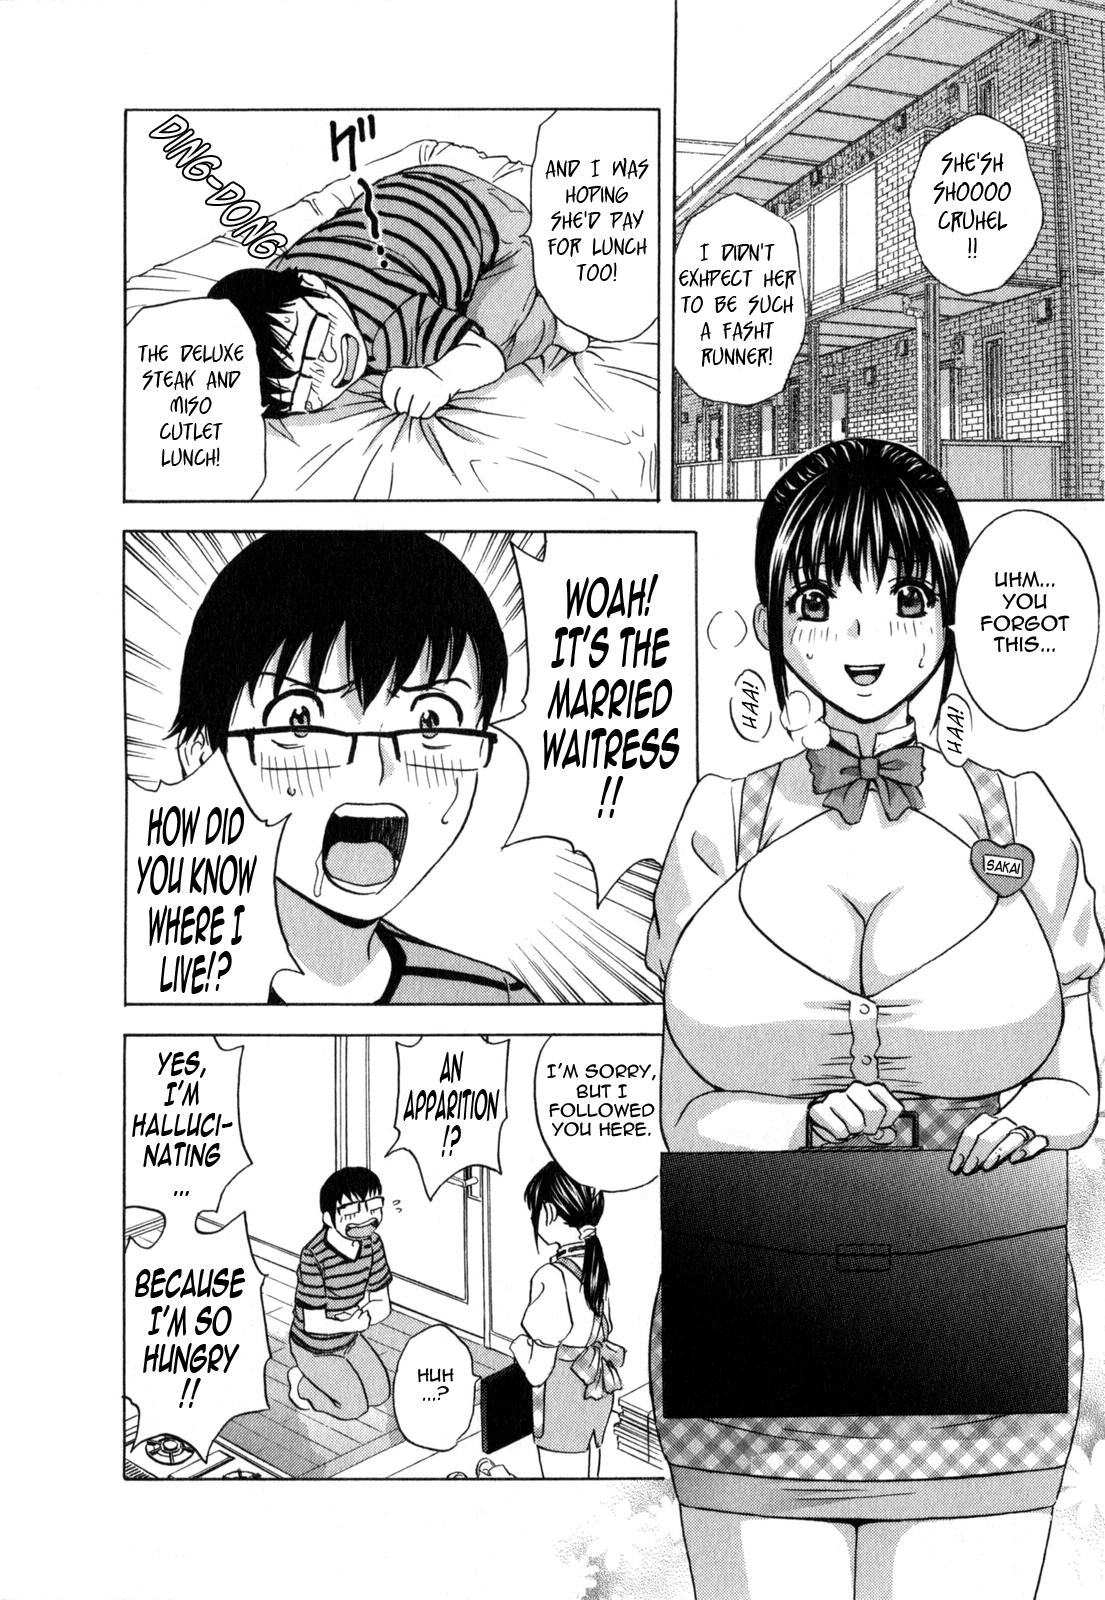 [Hidemaru] Life with Married Women Just Like a Manga 2 - Ch. 1-7 [English] {Tadanohito} 112